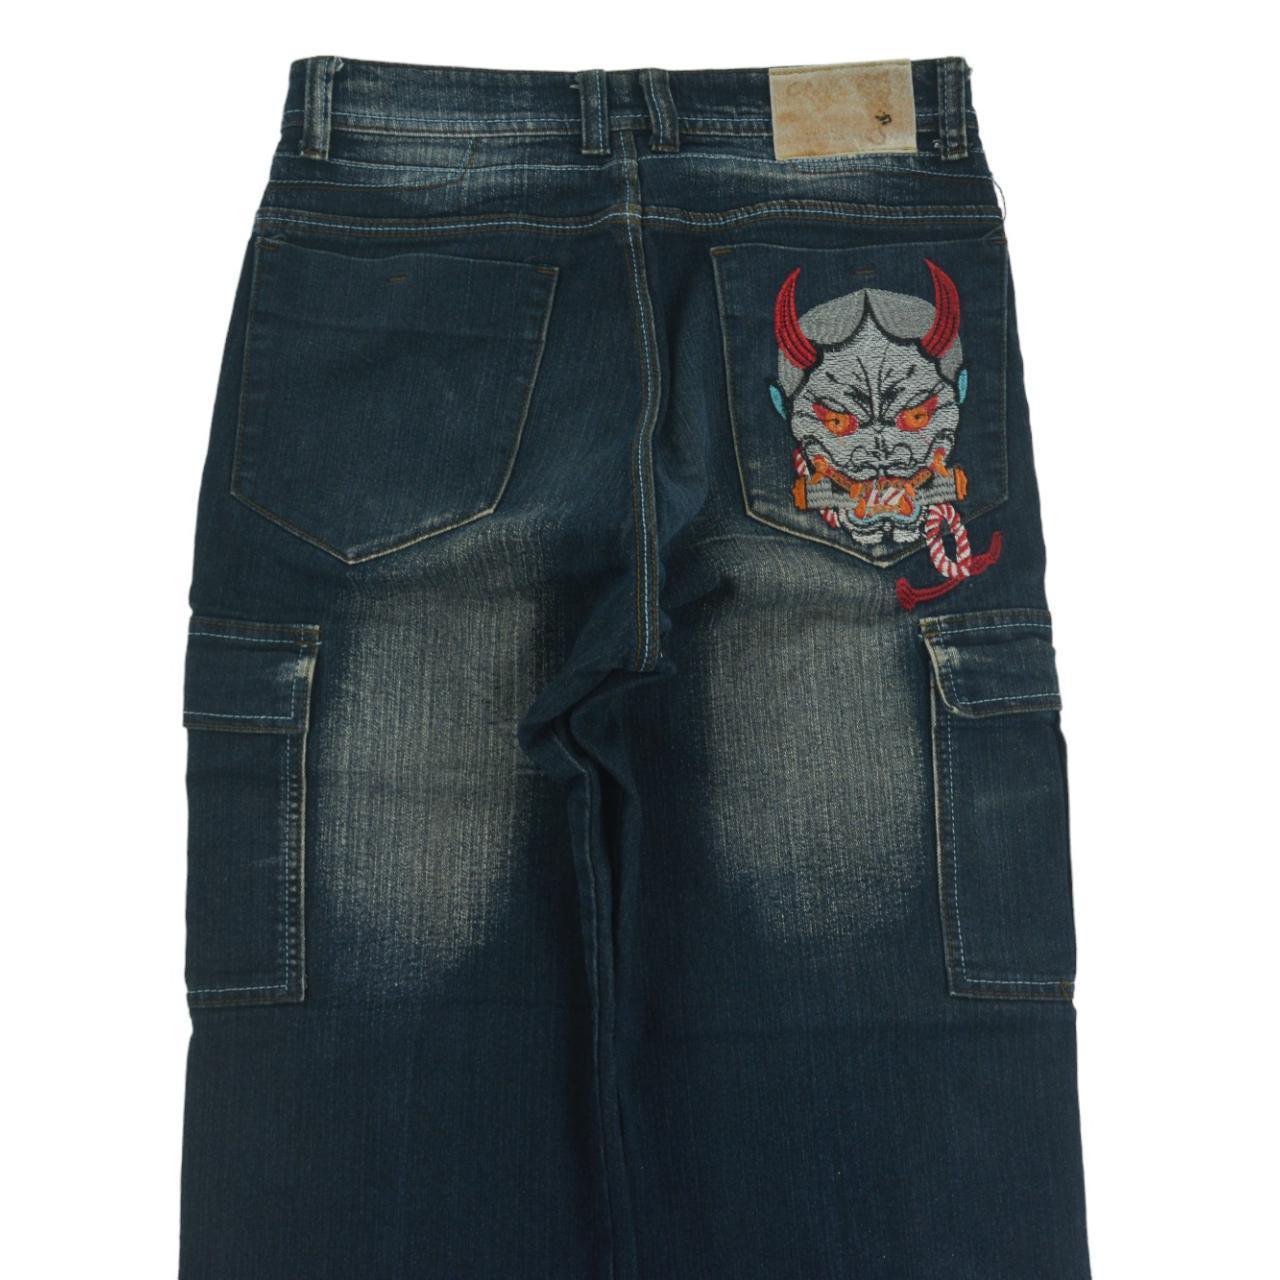 Vintage Japanese Denim Jeans Size W30 - Known Source